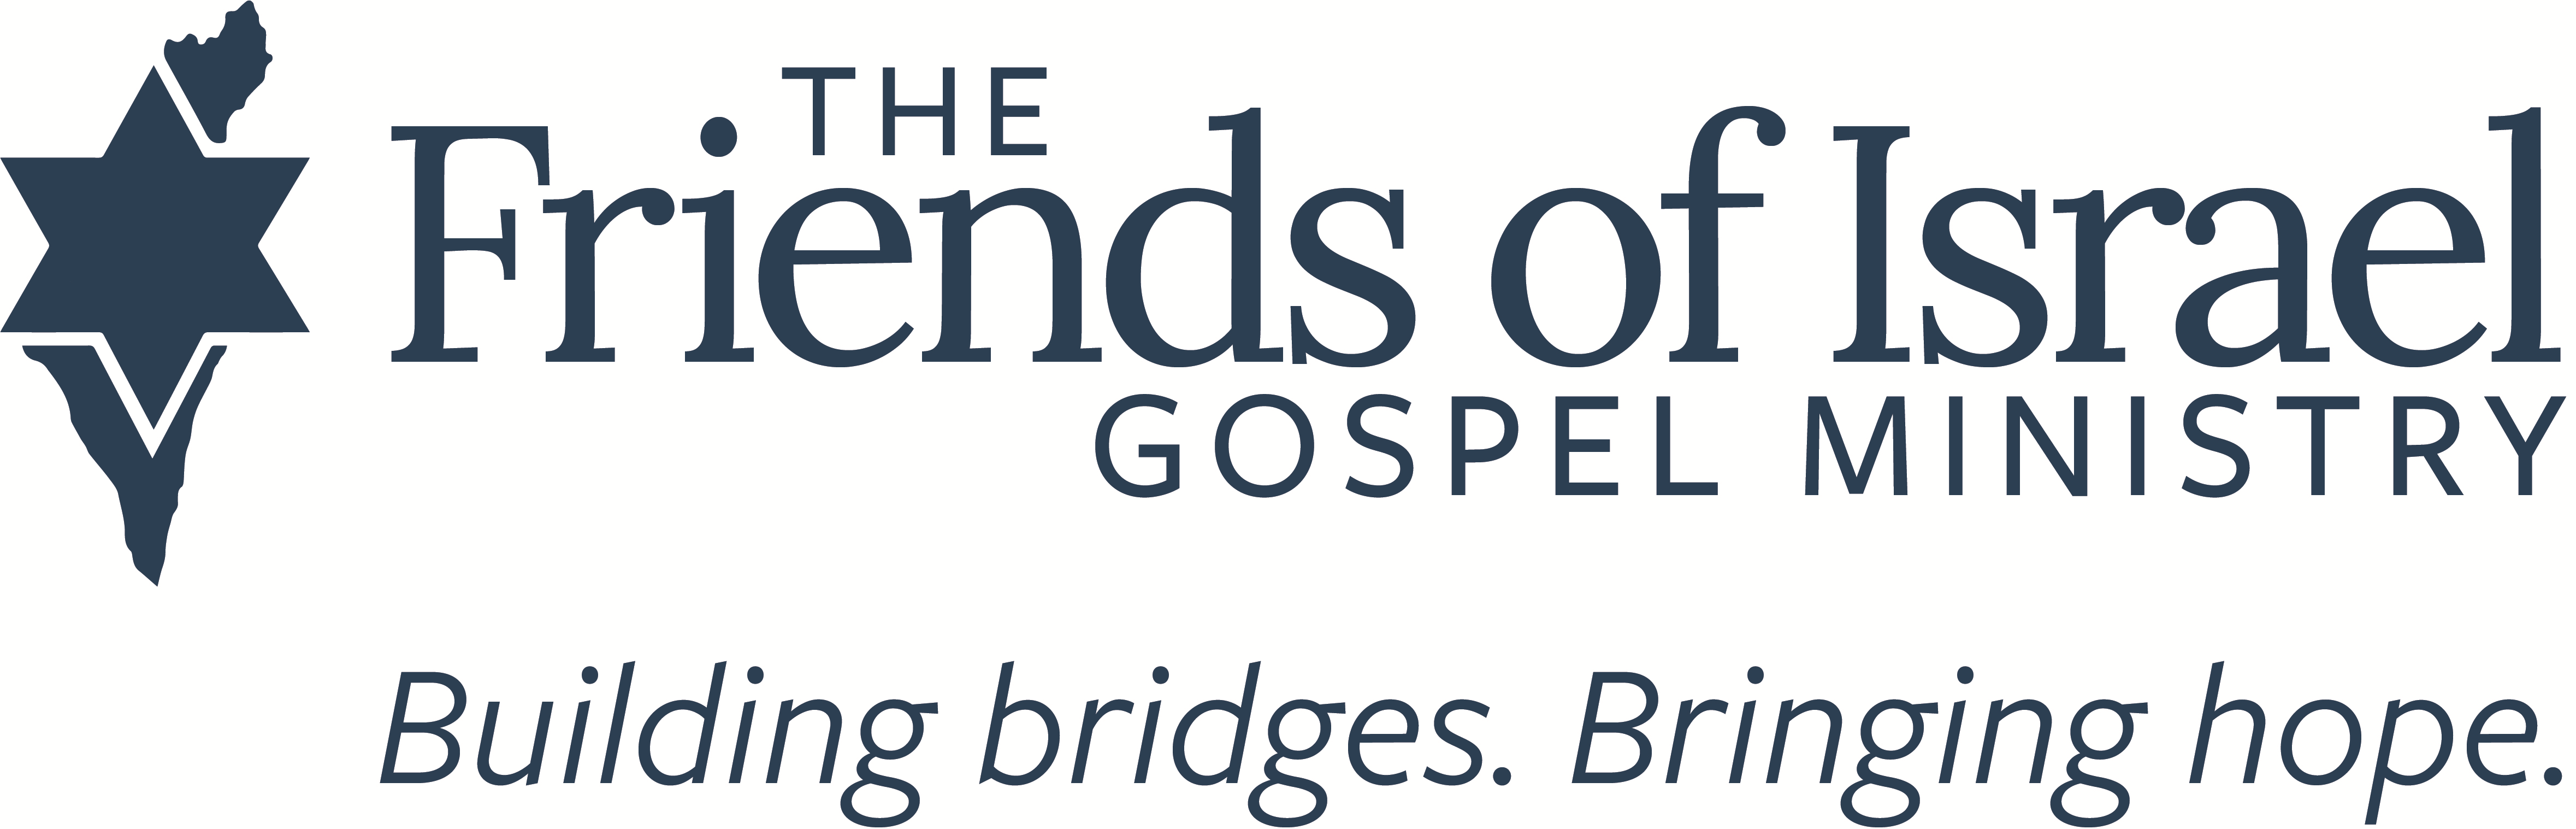 The Friends of Israel Gospel Ministry logo